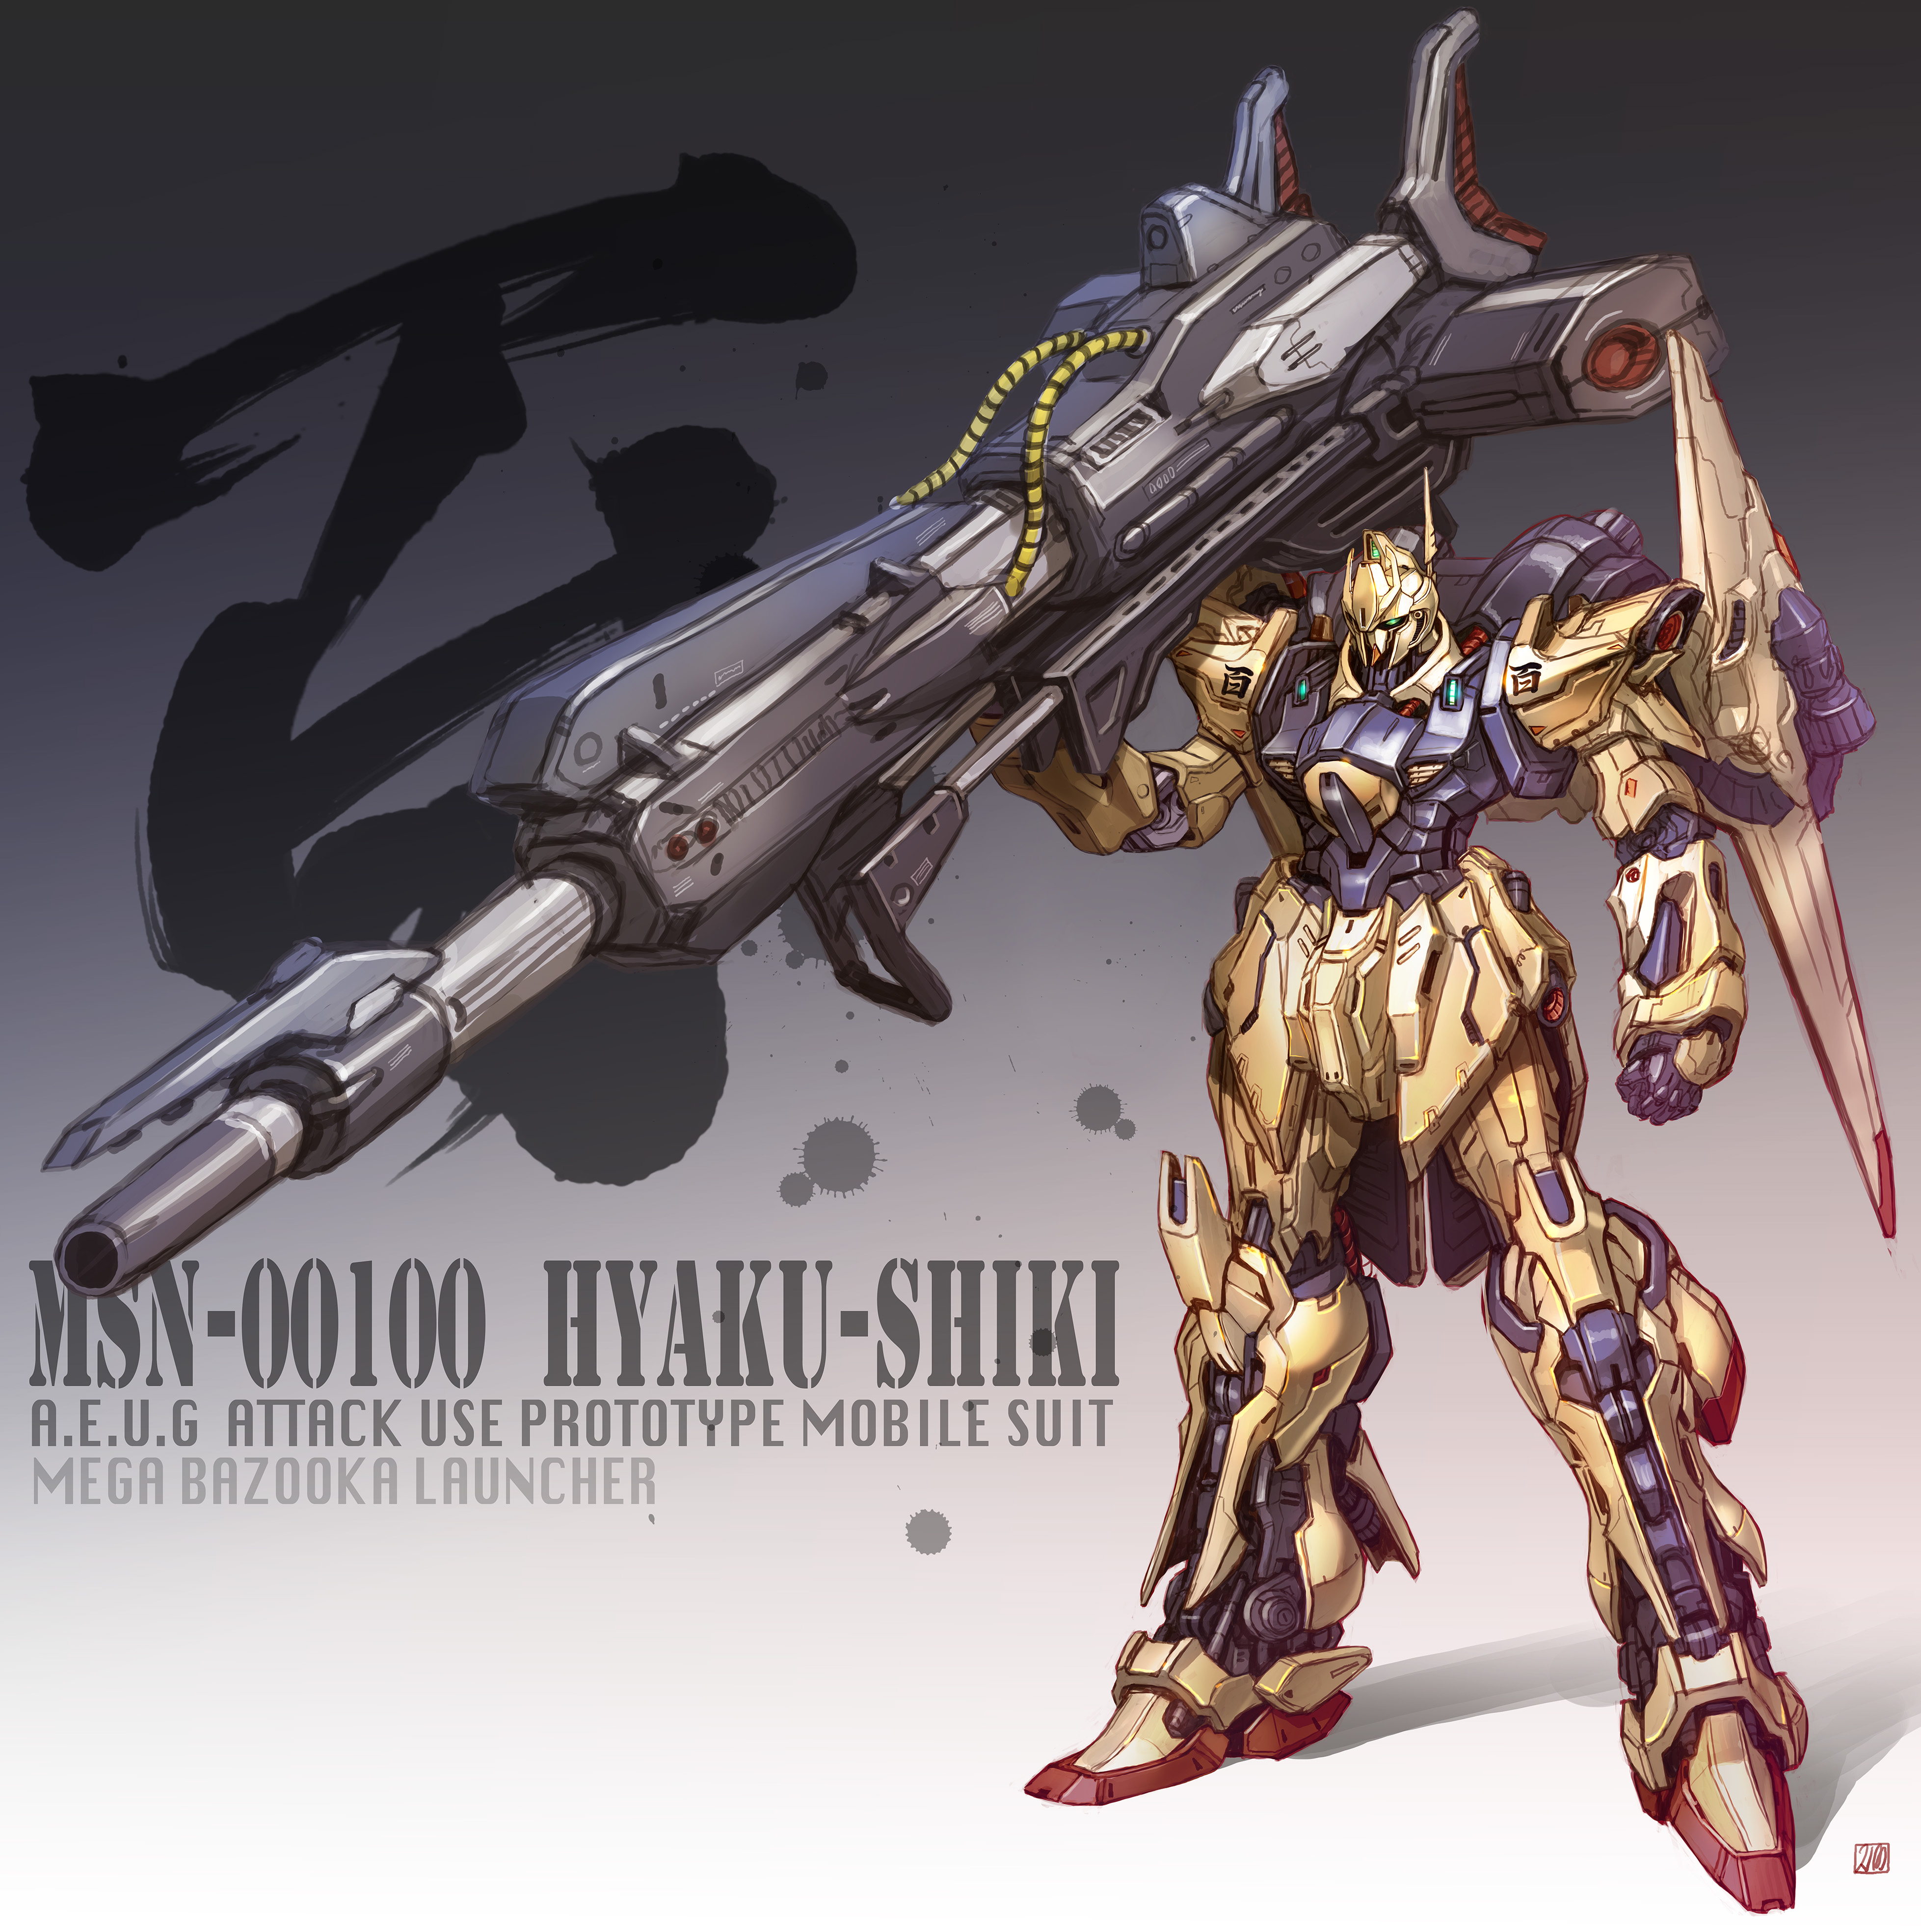 Anime 3914x3937 anime mechs Super Robot Taisen Mobile Suit Zeta Gundam Hyaku Shiki Mobile Suit artwork digital art fan art